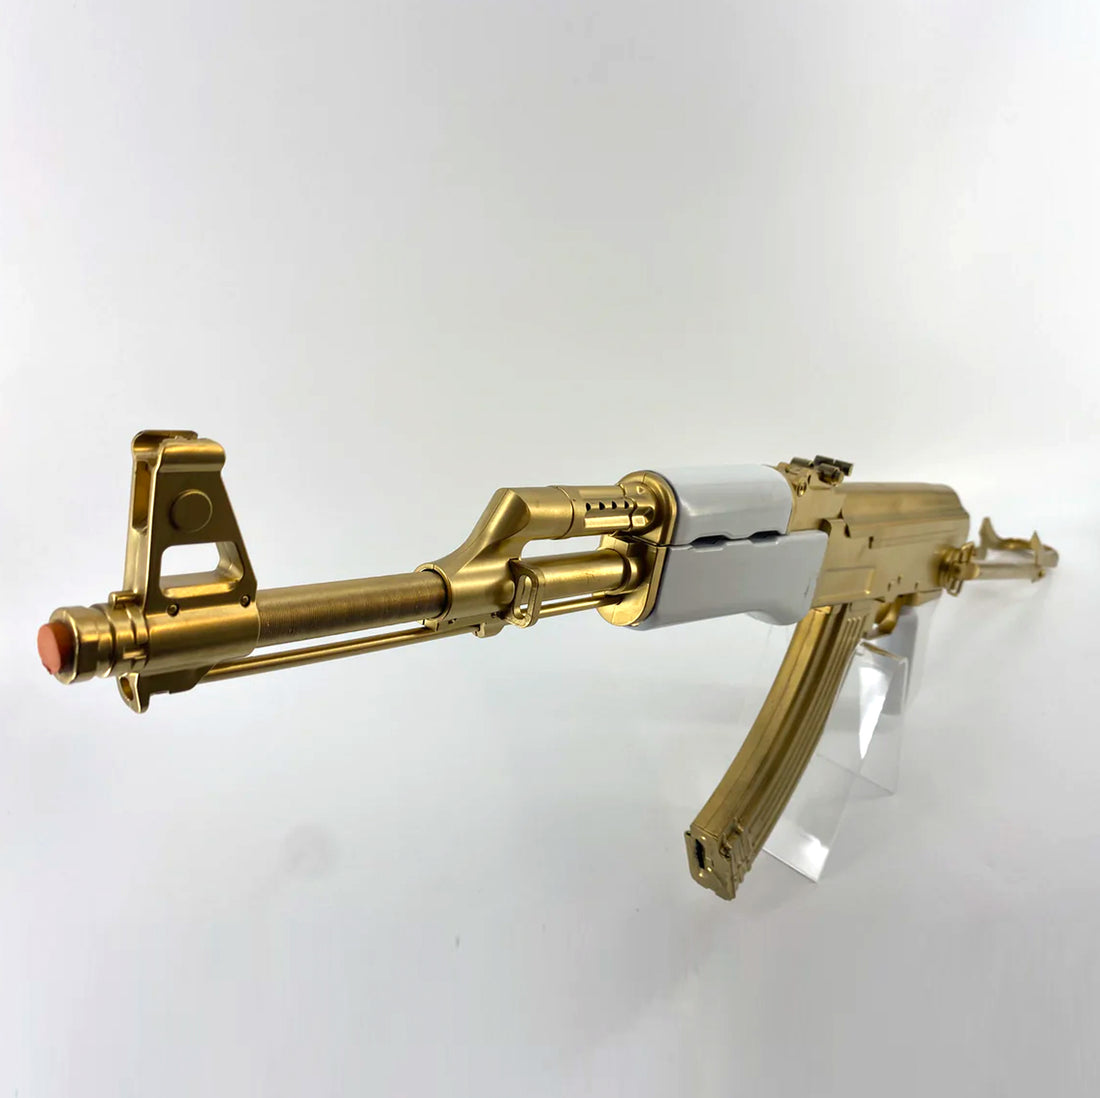 AK-47 Gold Pearl Grips Folding Stock Joker Rifle Prop